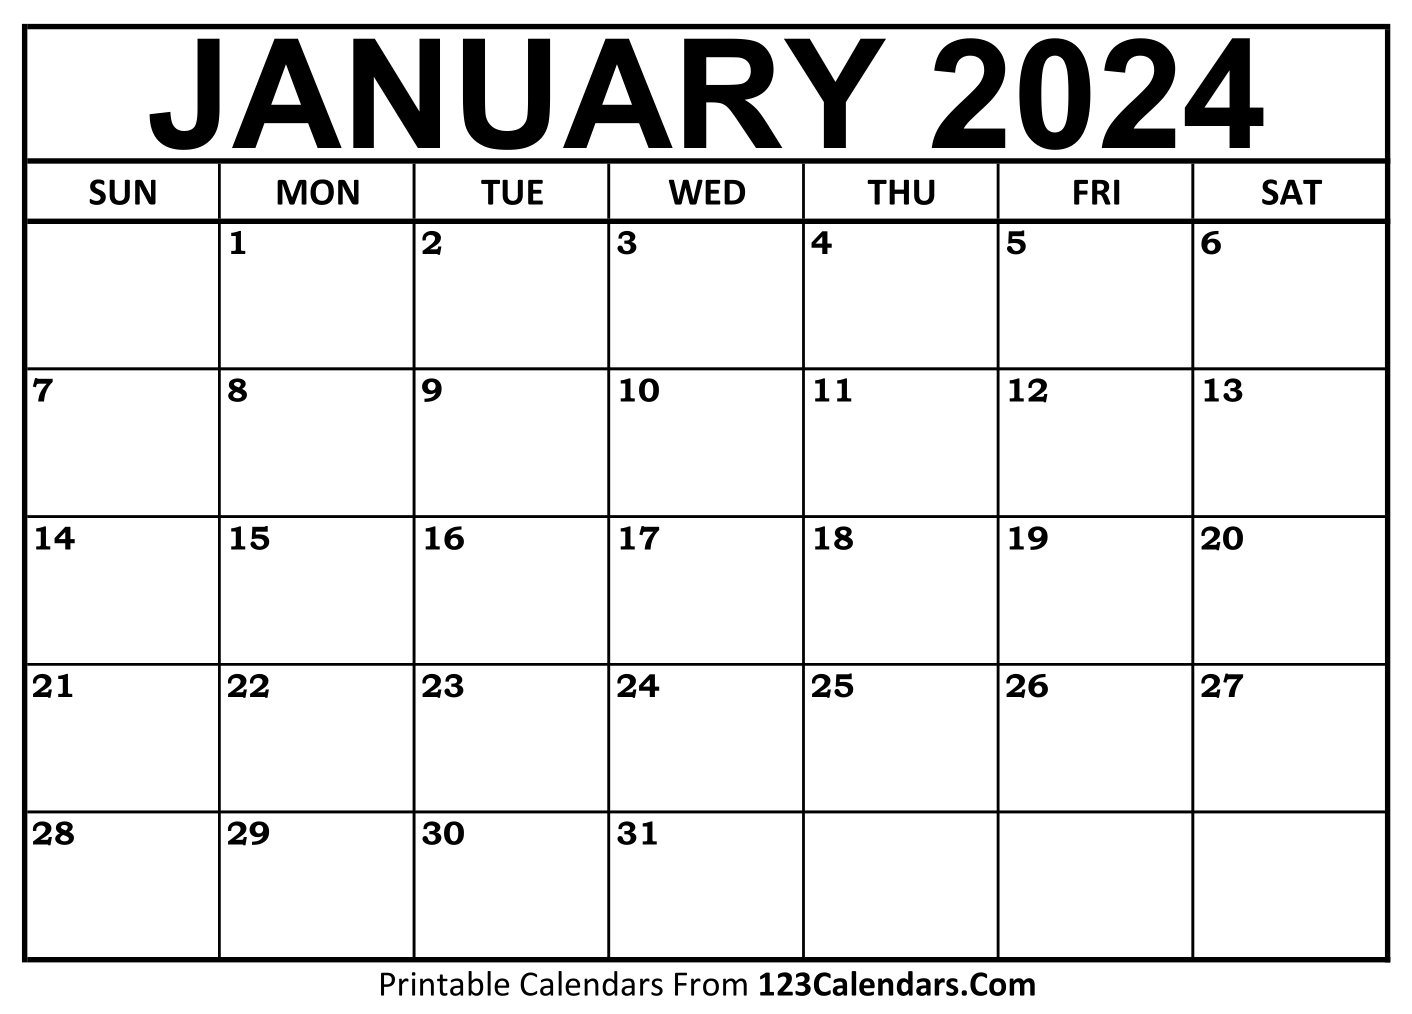 Printable January 2024 Calendar Templates - 123Calendars | Printable Calendar 2024 Template